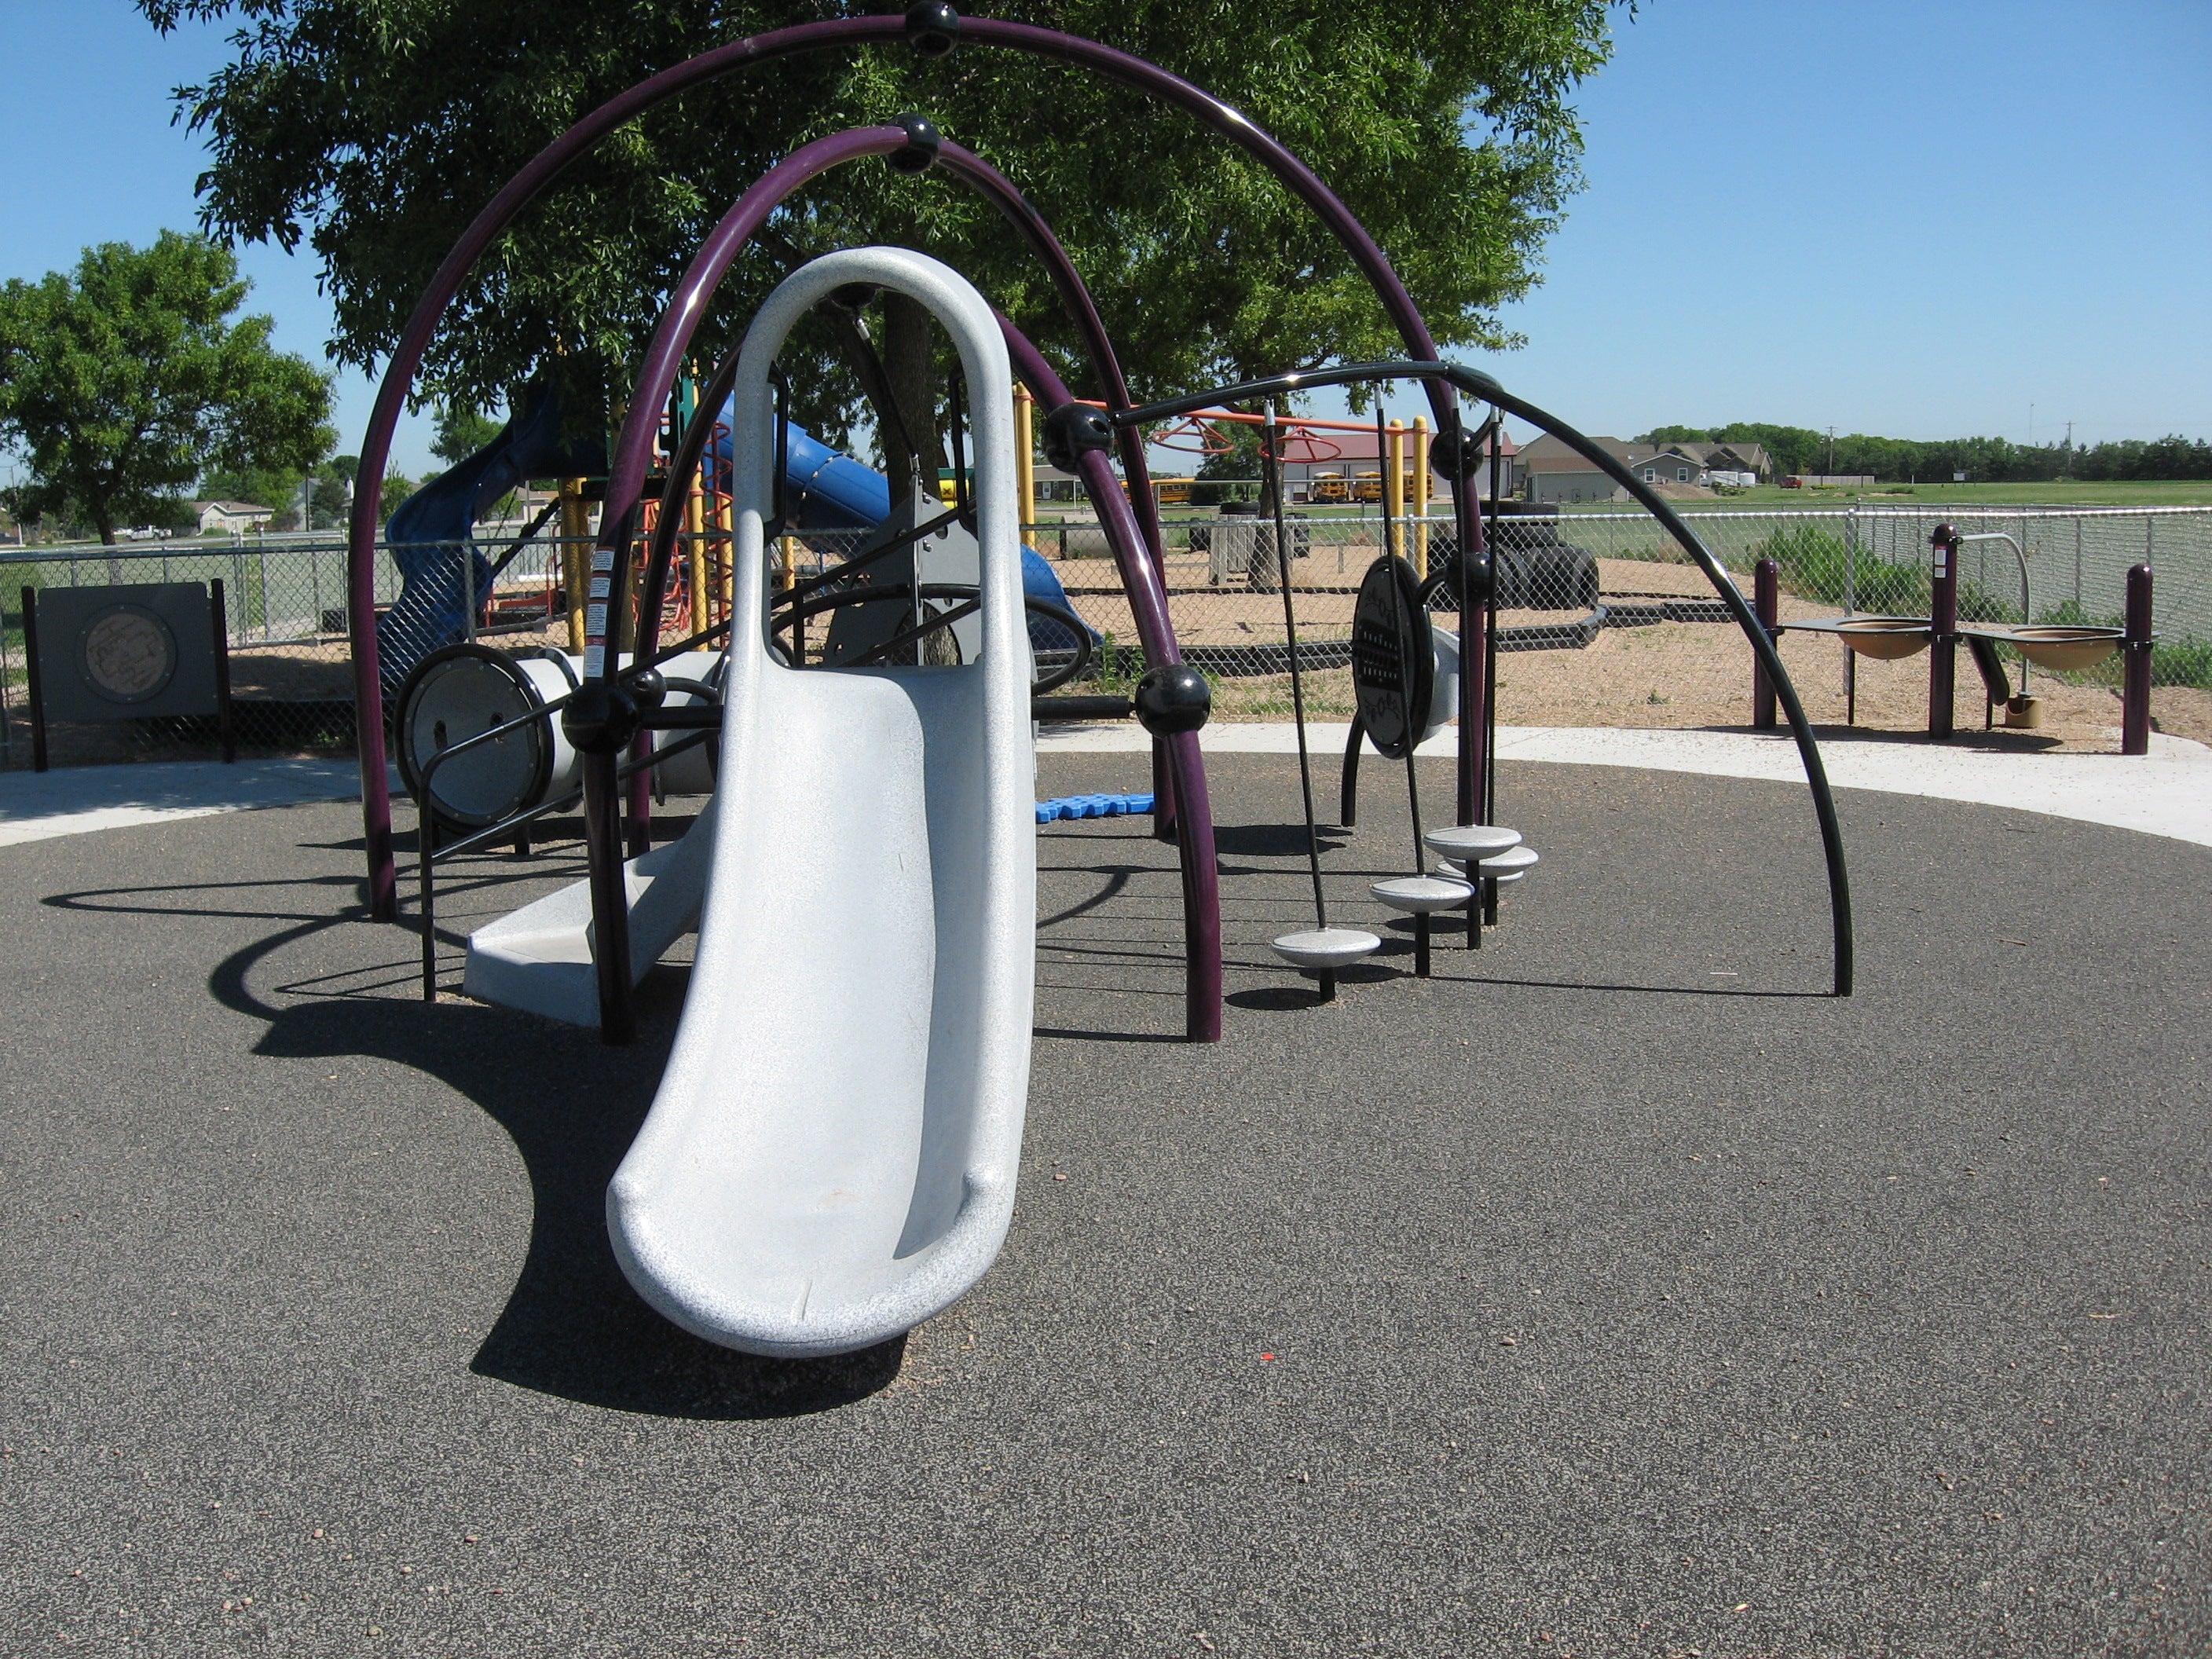 Accessible school playground equipment